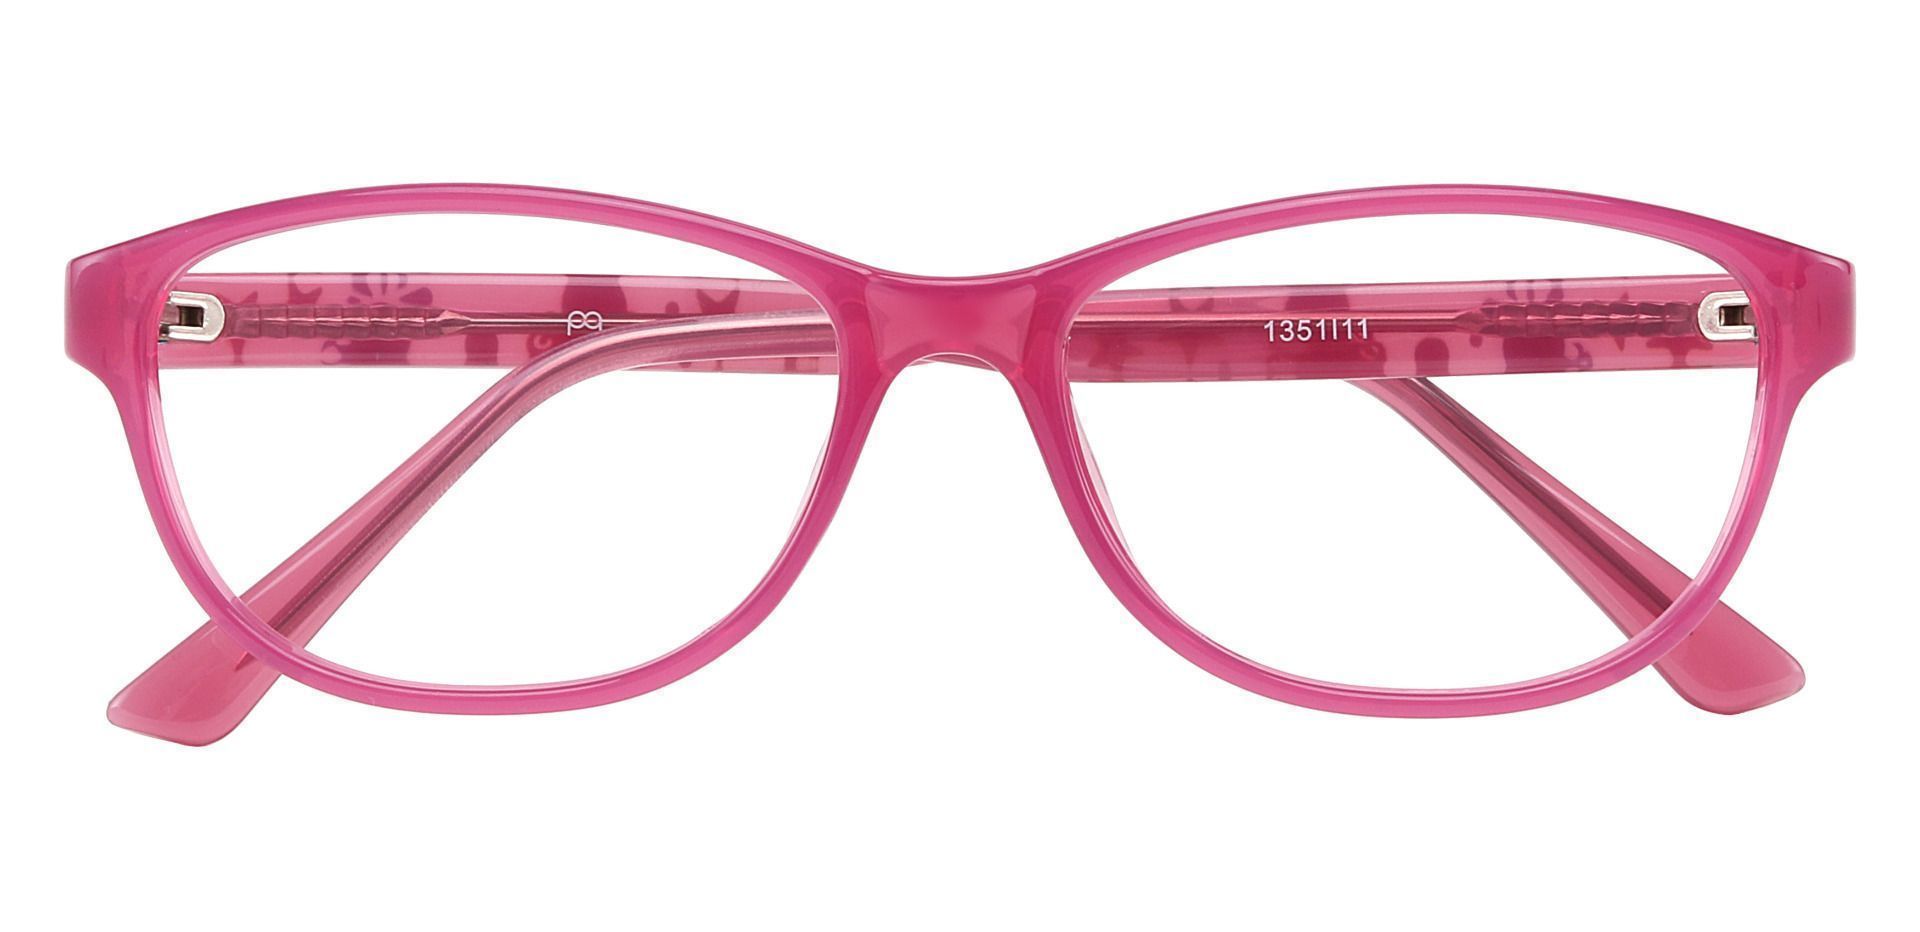 Patsy Oval Prescription Glasses - Pink